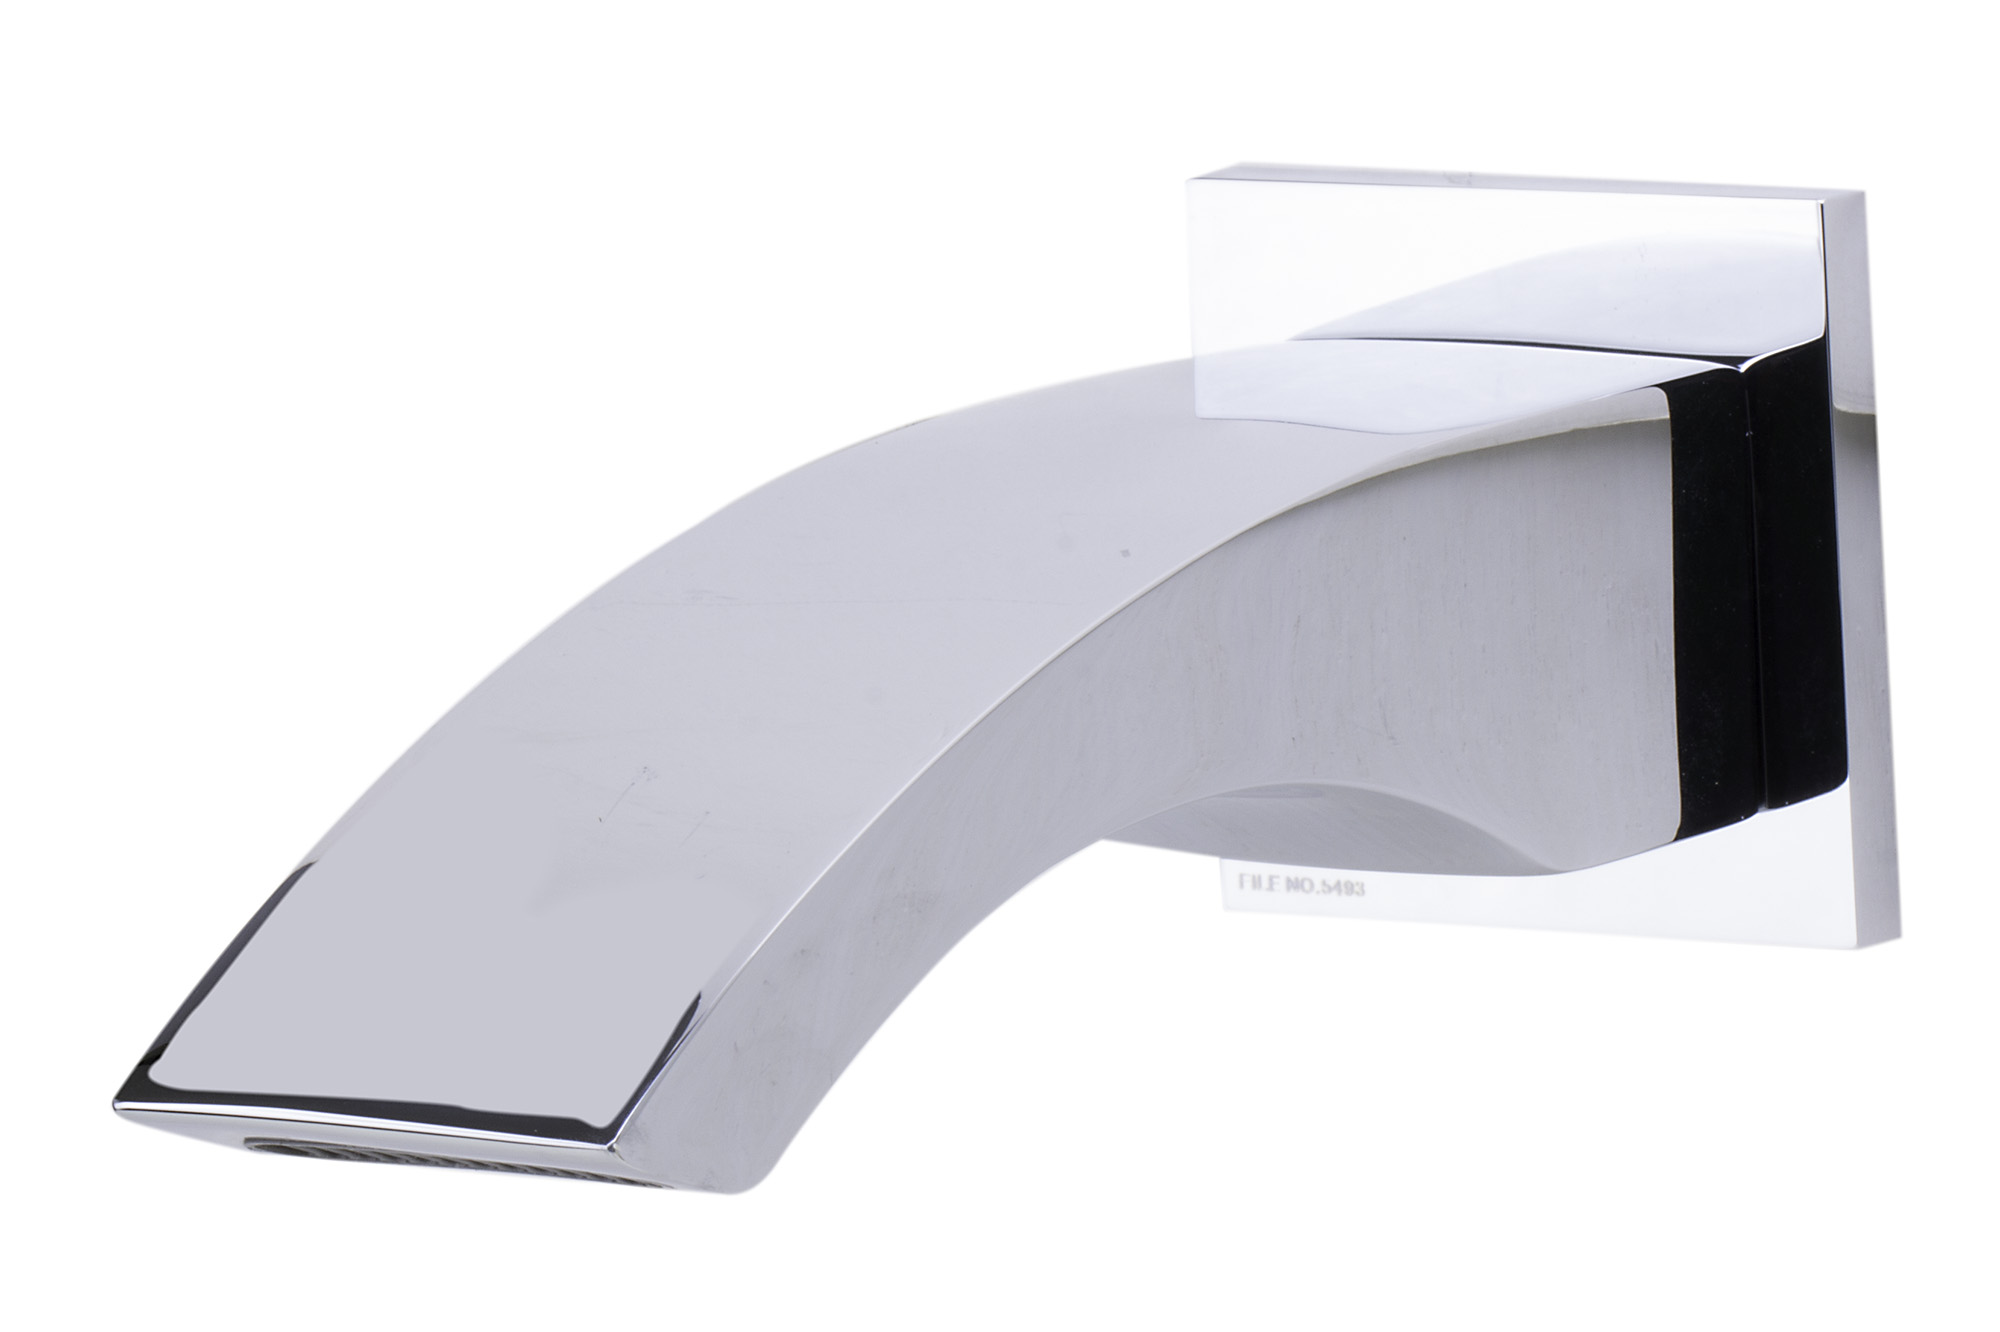 ALFI brand AB3301-PC Polished Chrome Curved Wallmounted Tub Filler Bathroom Spout